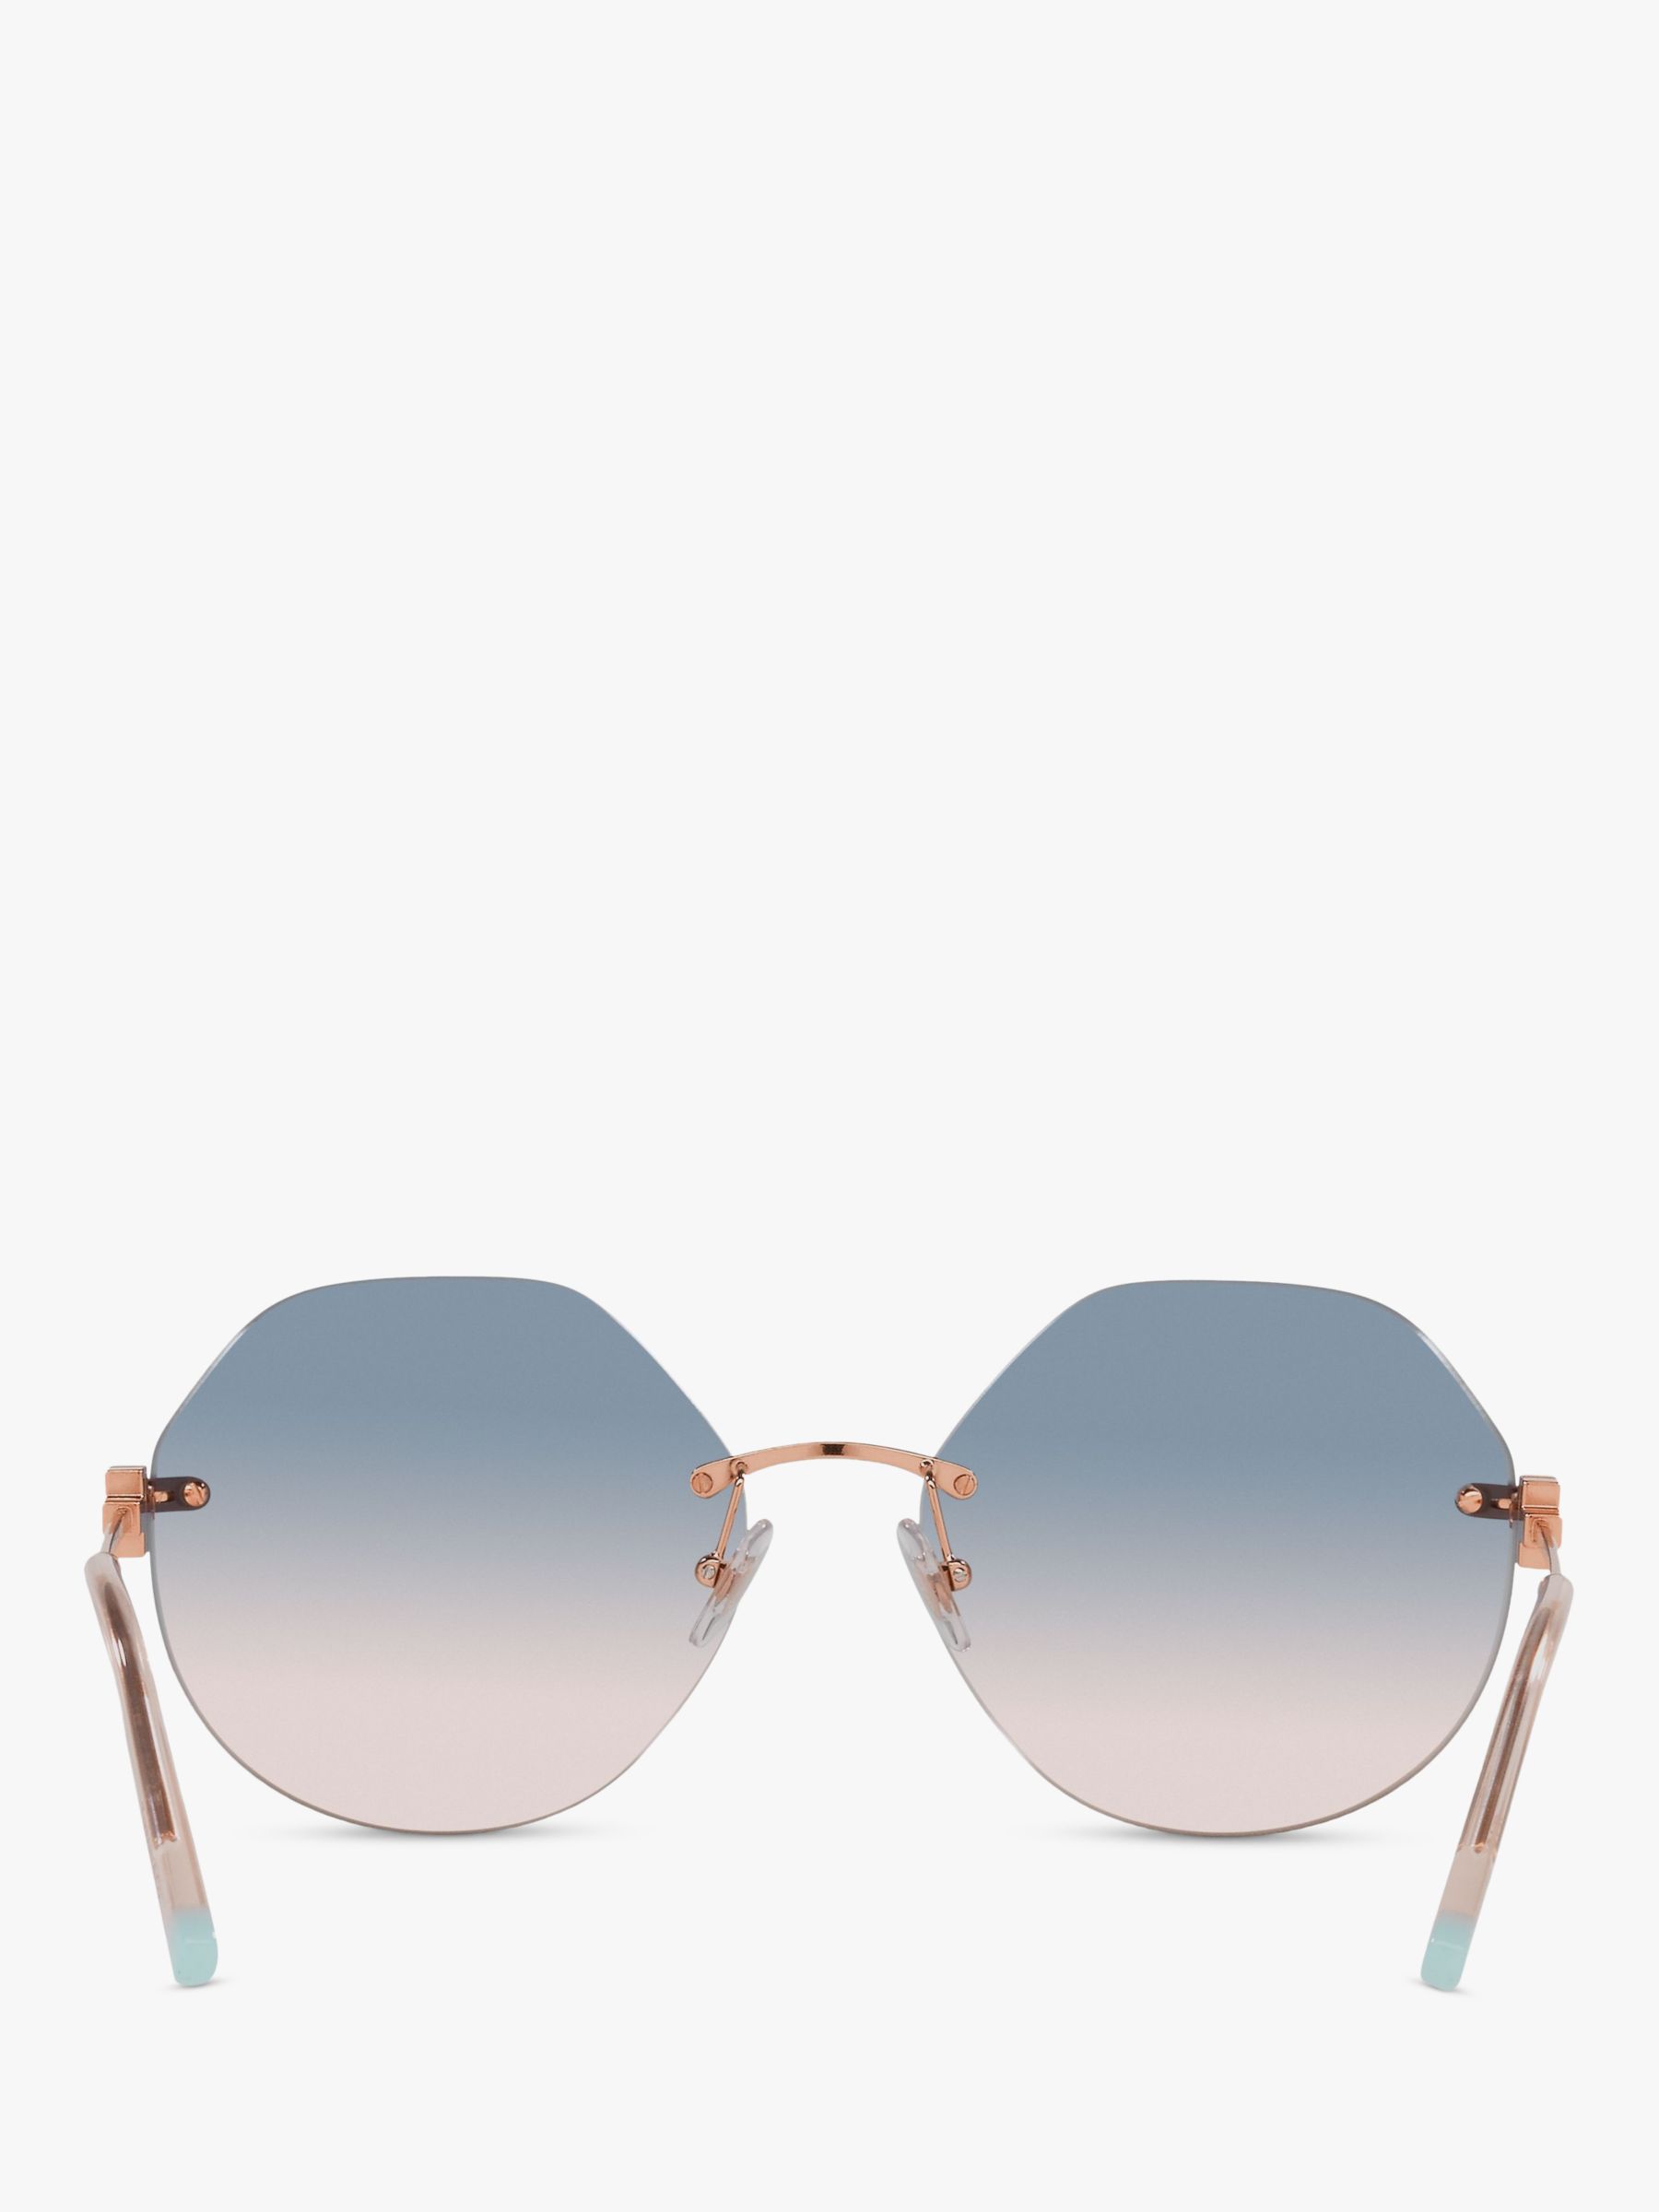 Tiffany & Co TF3077 Women's Irregular Sunglasses, Rubedo